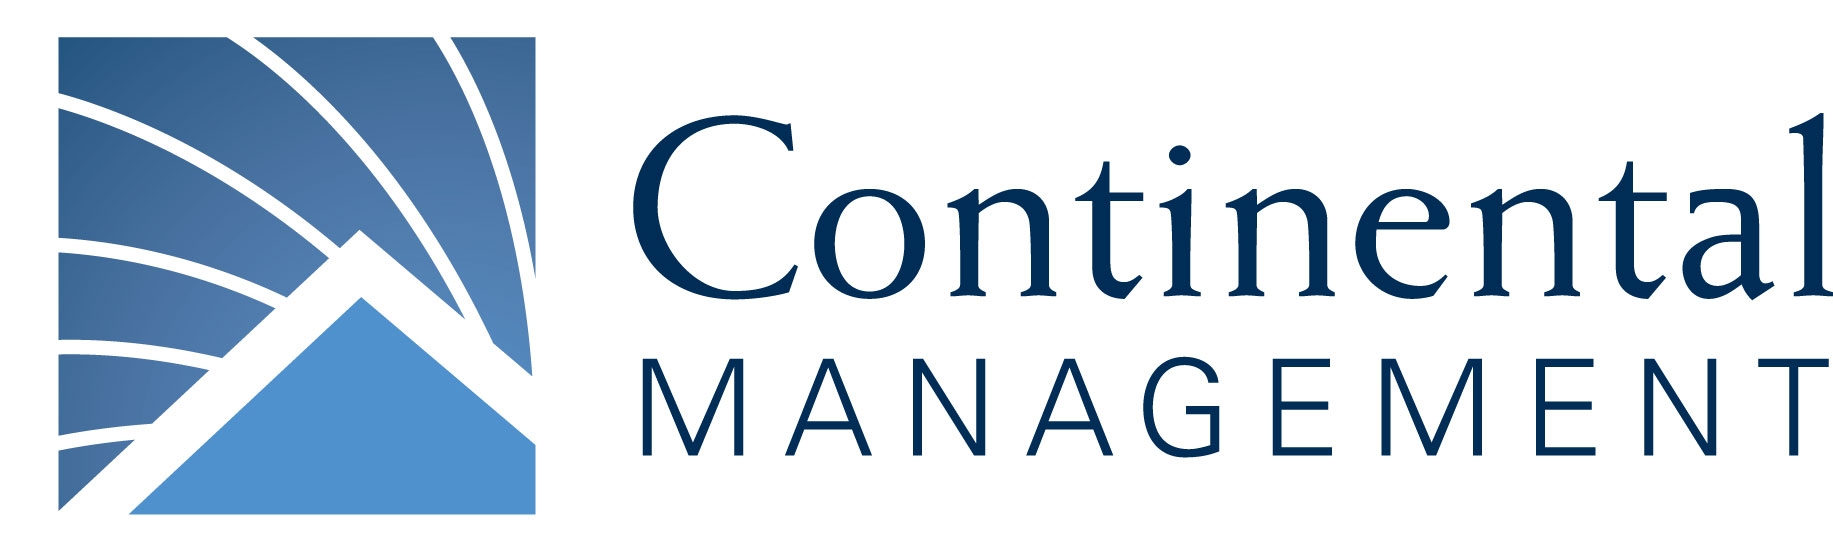 Continental Management Company Logo